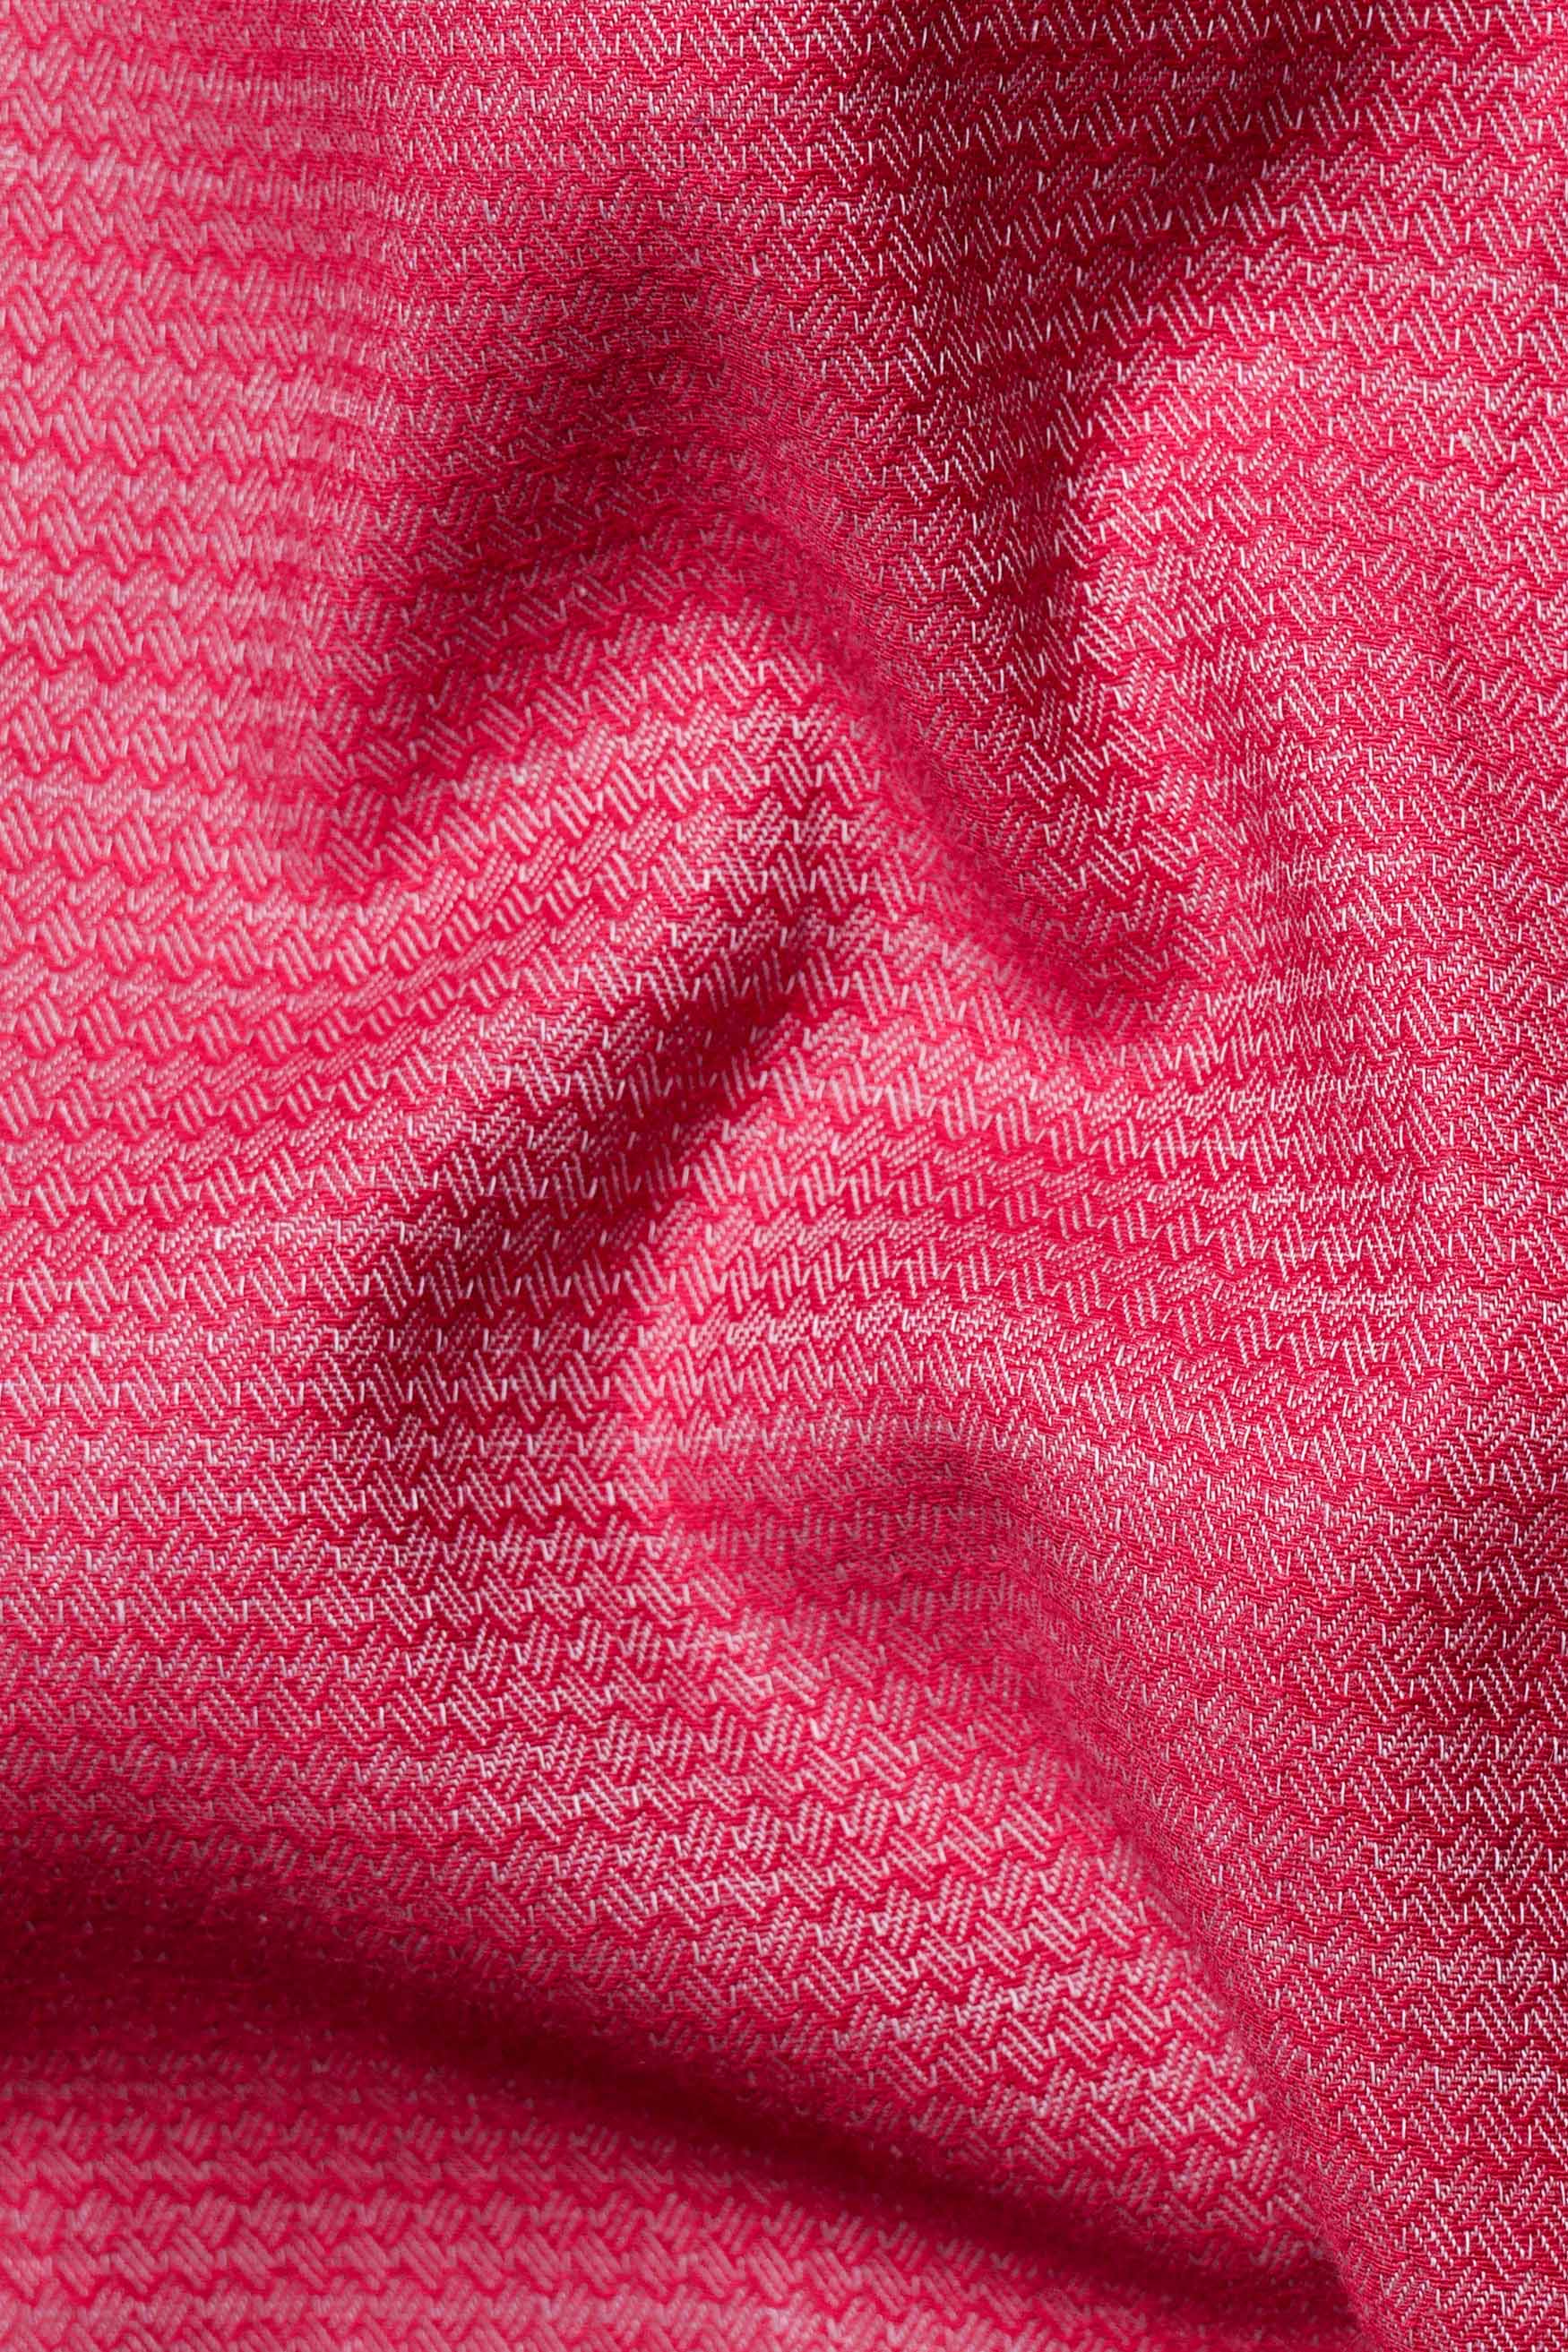 Mandy Pink Dobby Textured Premium Giza Cotton Shirt 11453-MN-38, 11453-MN-H-38, 11453-MN-39, 11453-MN-H-39, 11453-MN-40, 11453-MN-H-40, 11453-MN-42, 11453-MN-H-42, 11453-MN-44, 11453-MN-H-44, 11453-MN-46, 11453-MN-H-46, 11453-MN-48, 11453-MN-H-48, 11453-MN-50, 11453-MN-H-50, 11453-MN-52, 11453-MN-H-52